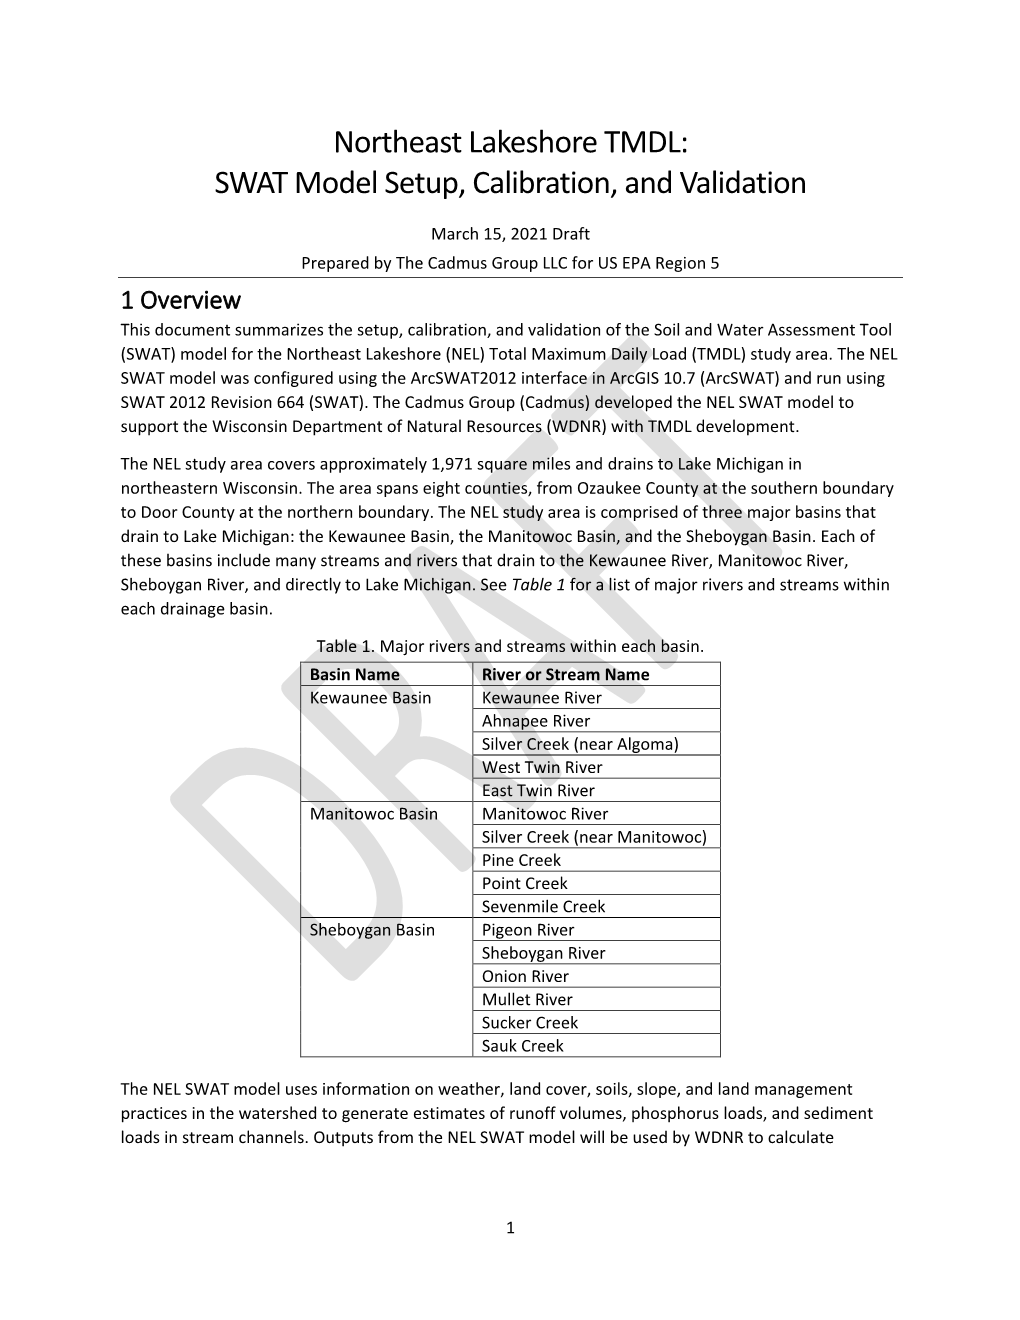 Northeast Lakeshore TMDL: SWAT Model Setup, Calibration, and Validation